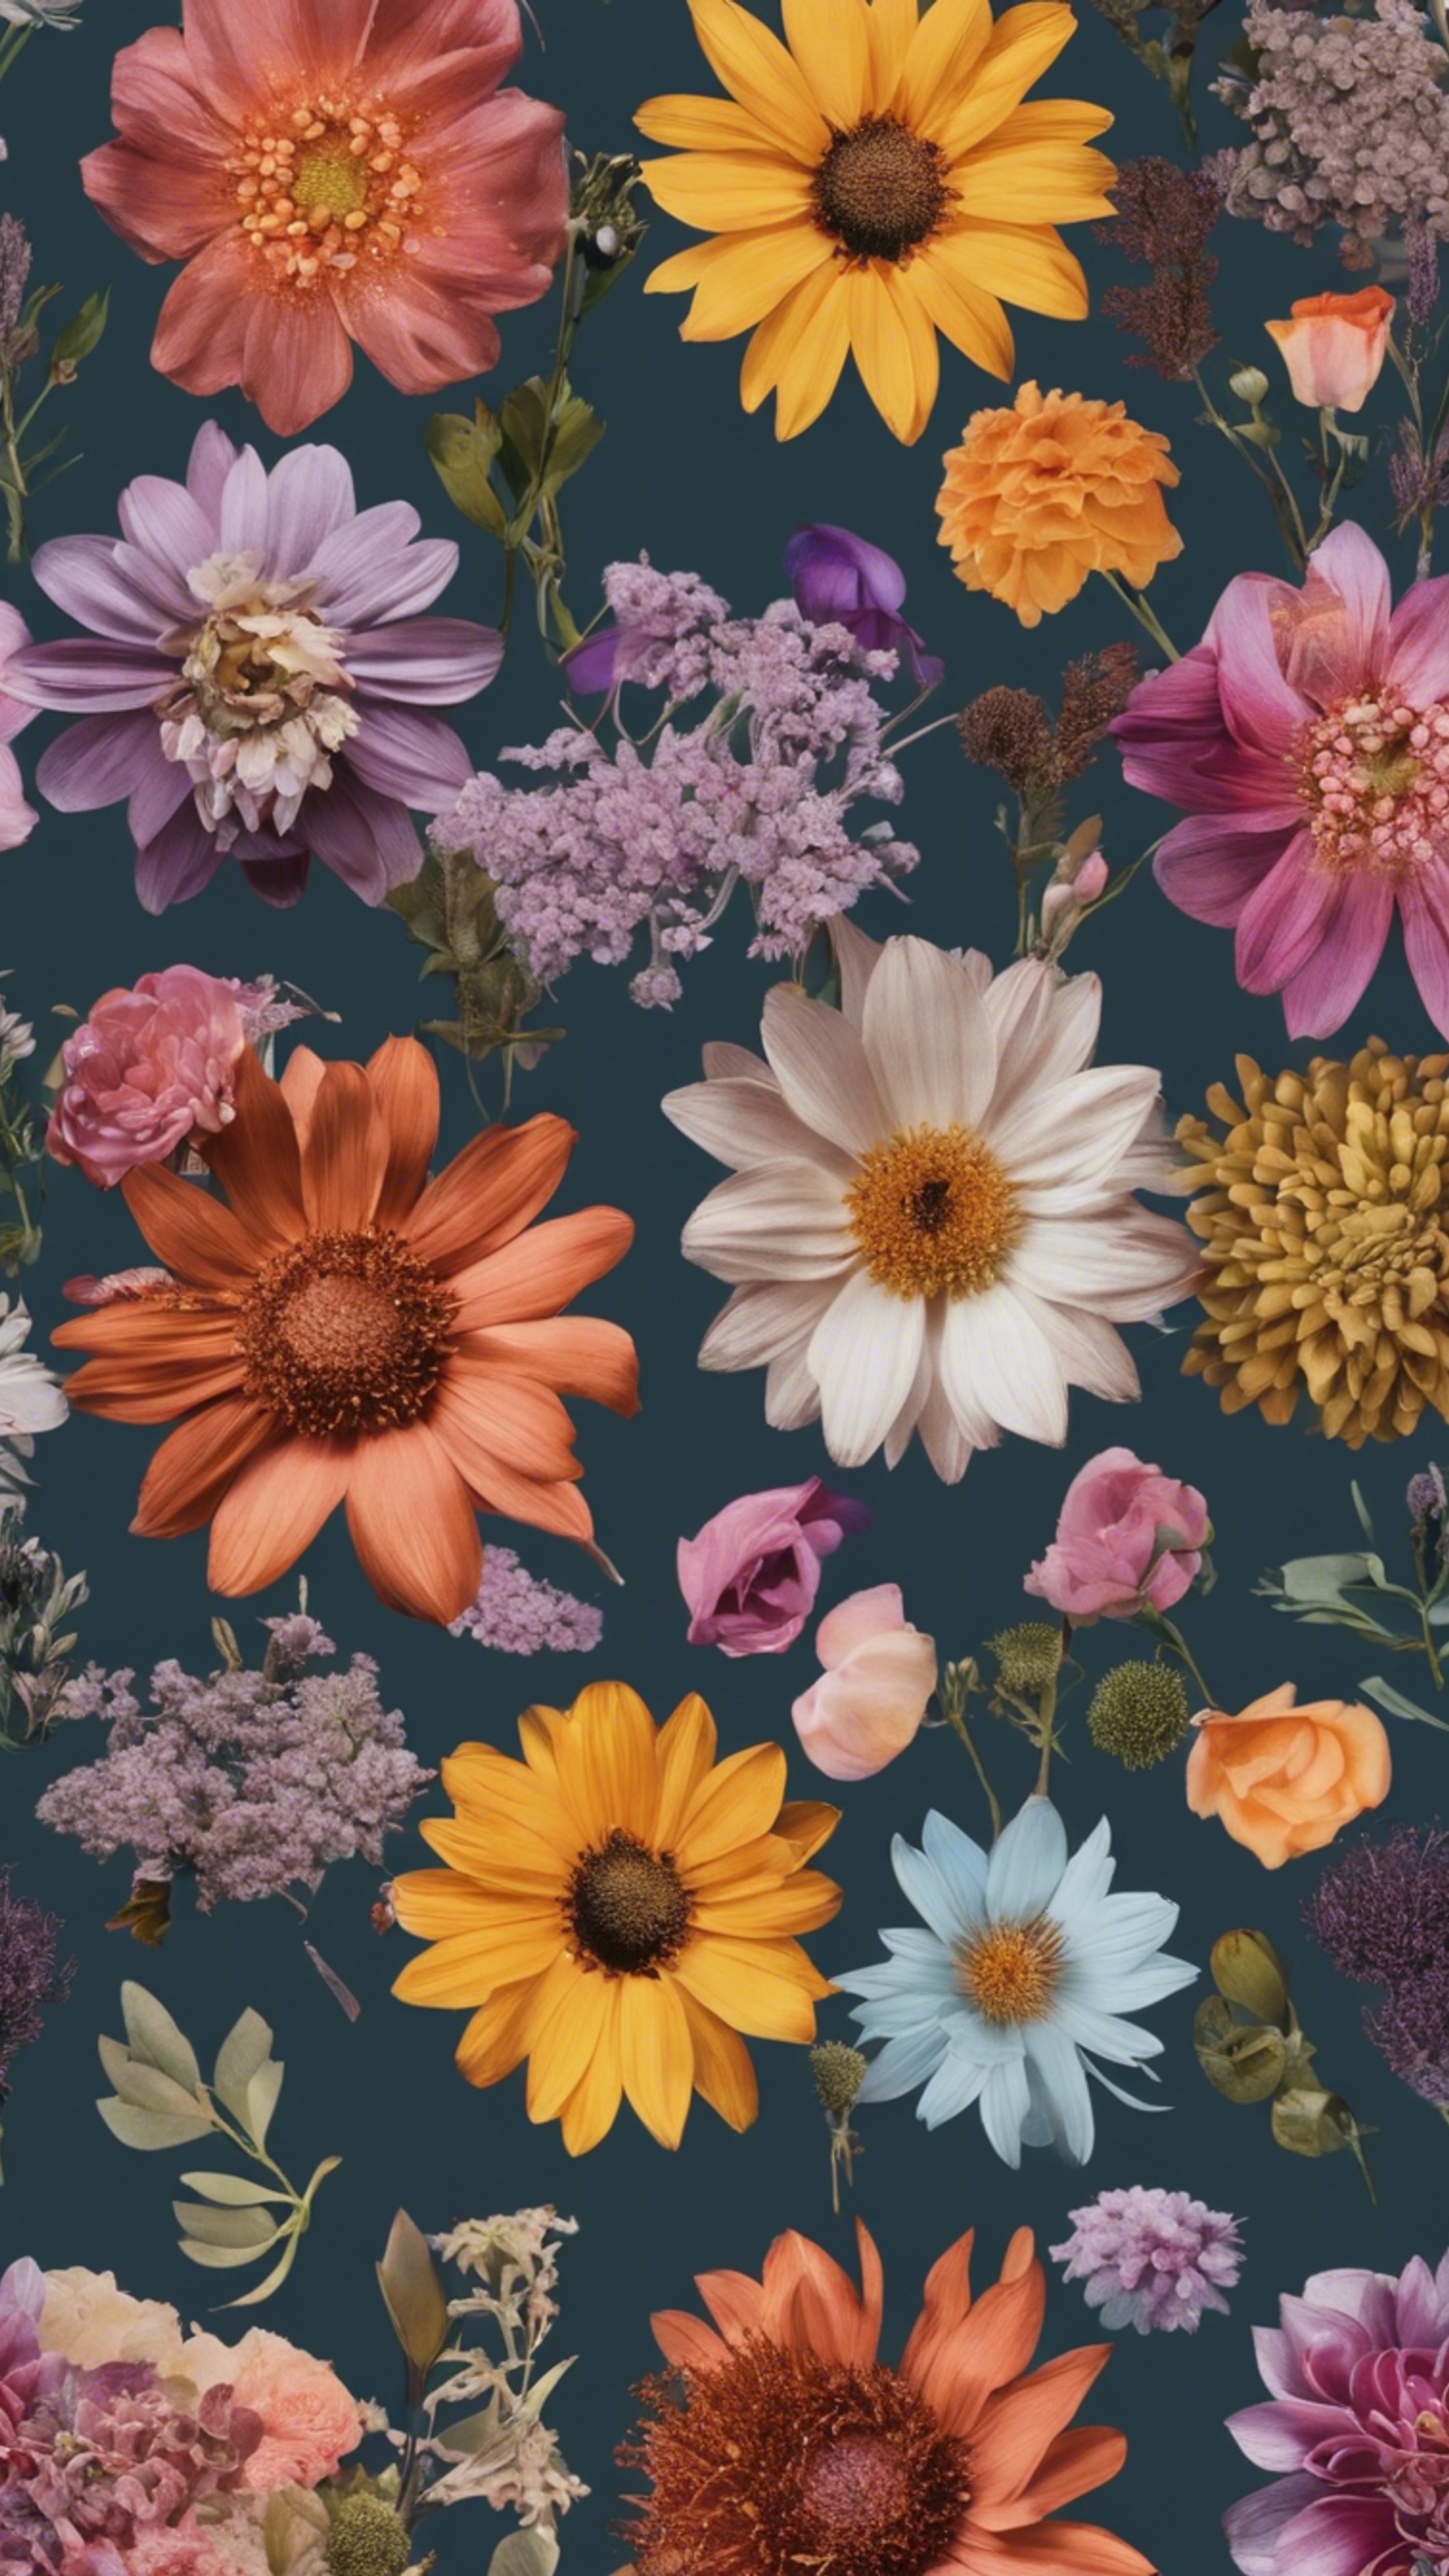 Multiple flowers of different types and colors, distinctively arranged in a bohemian floral design pattern. Papel de parede[d475d4e8f3a0489d92d5]